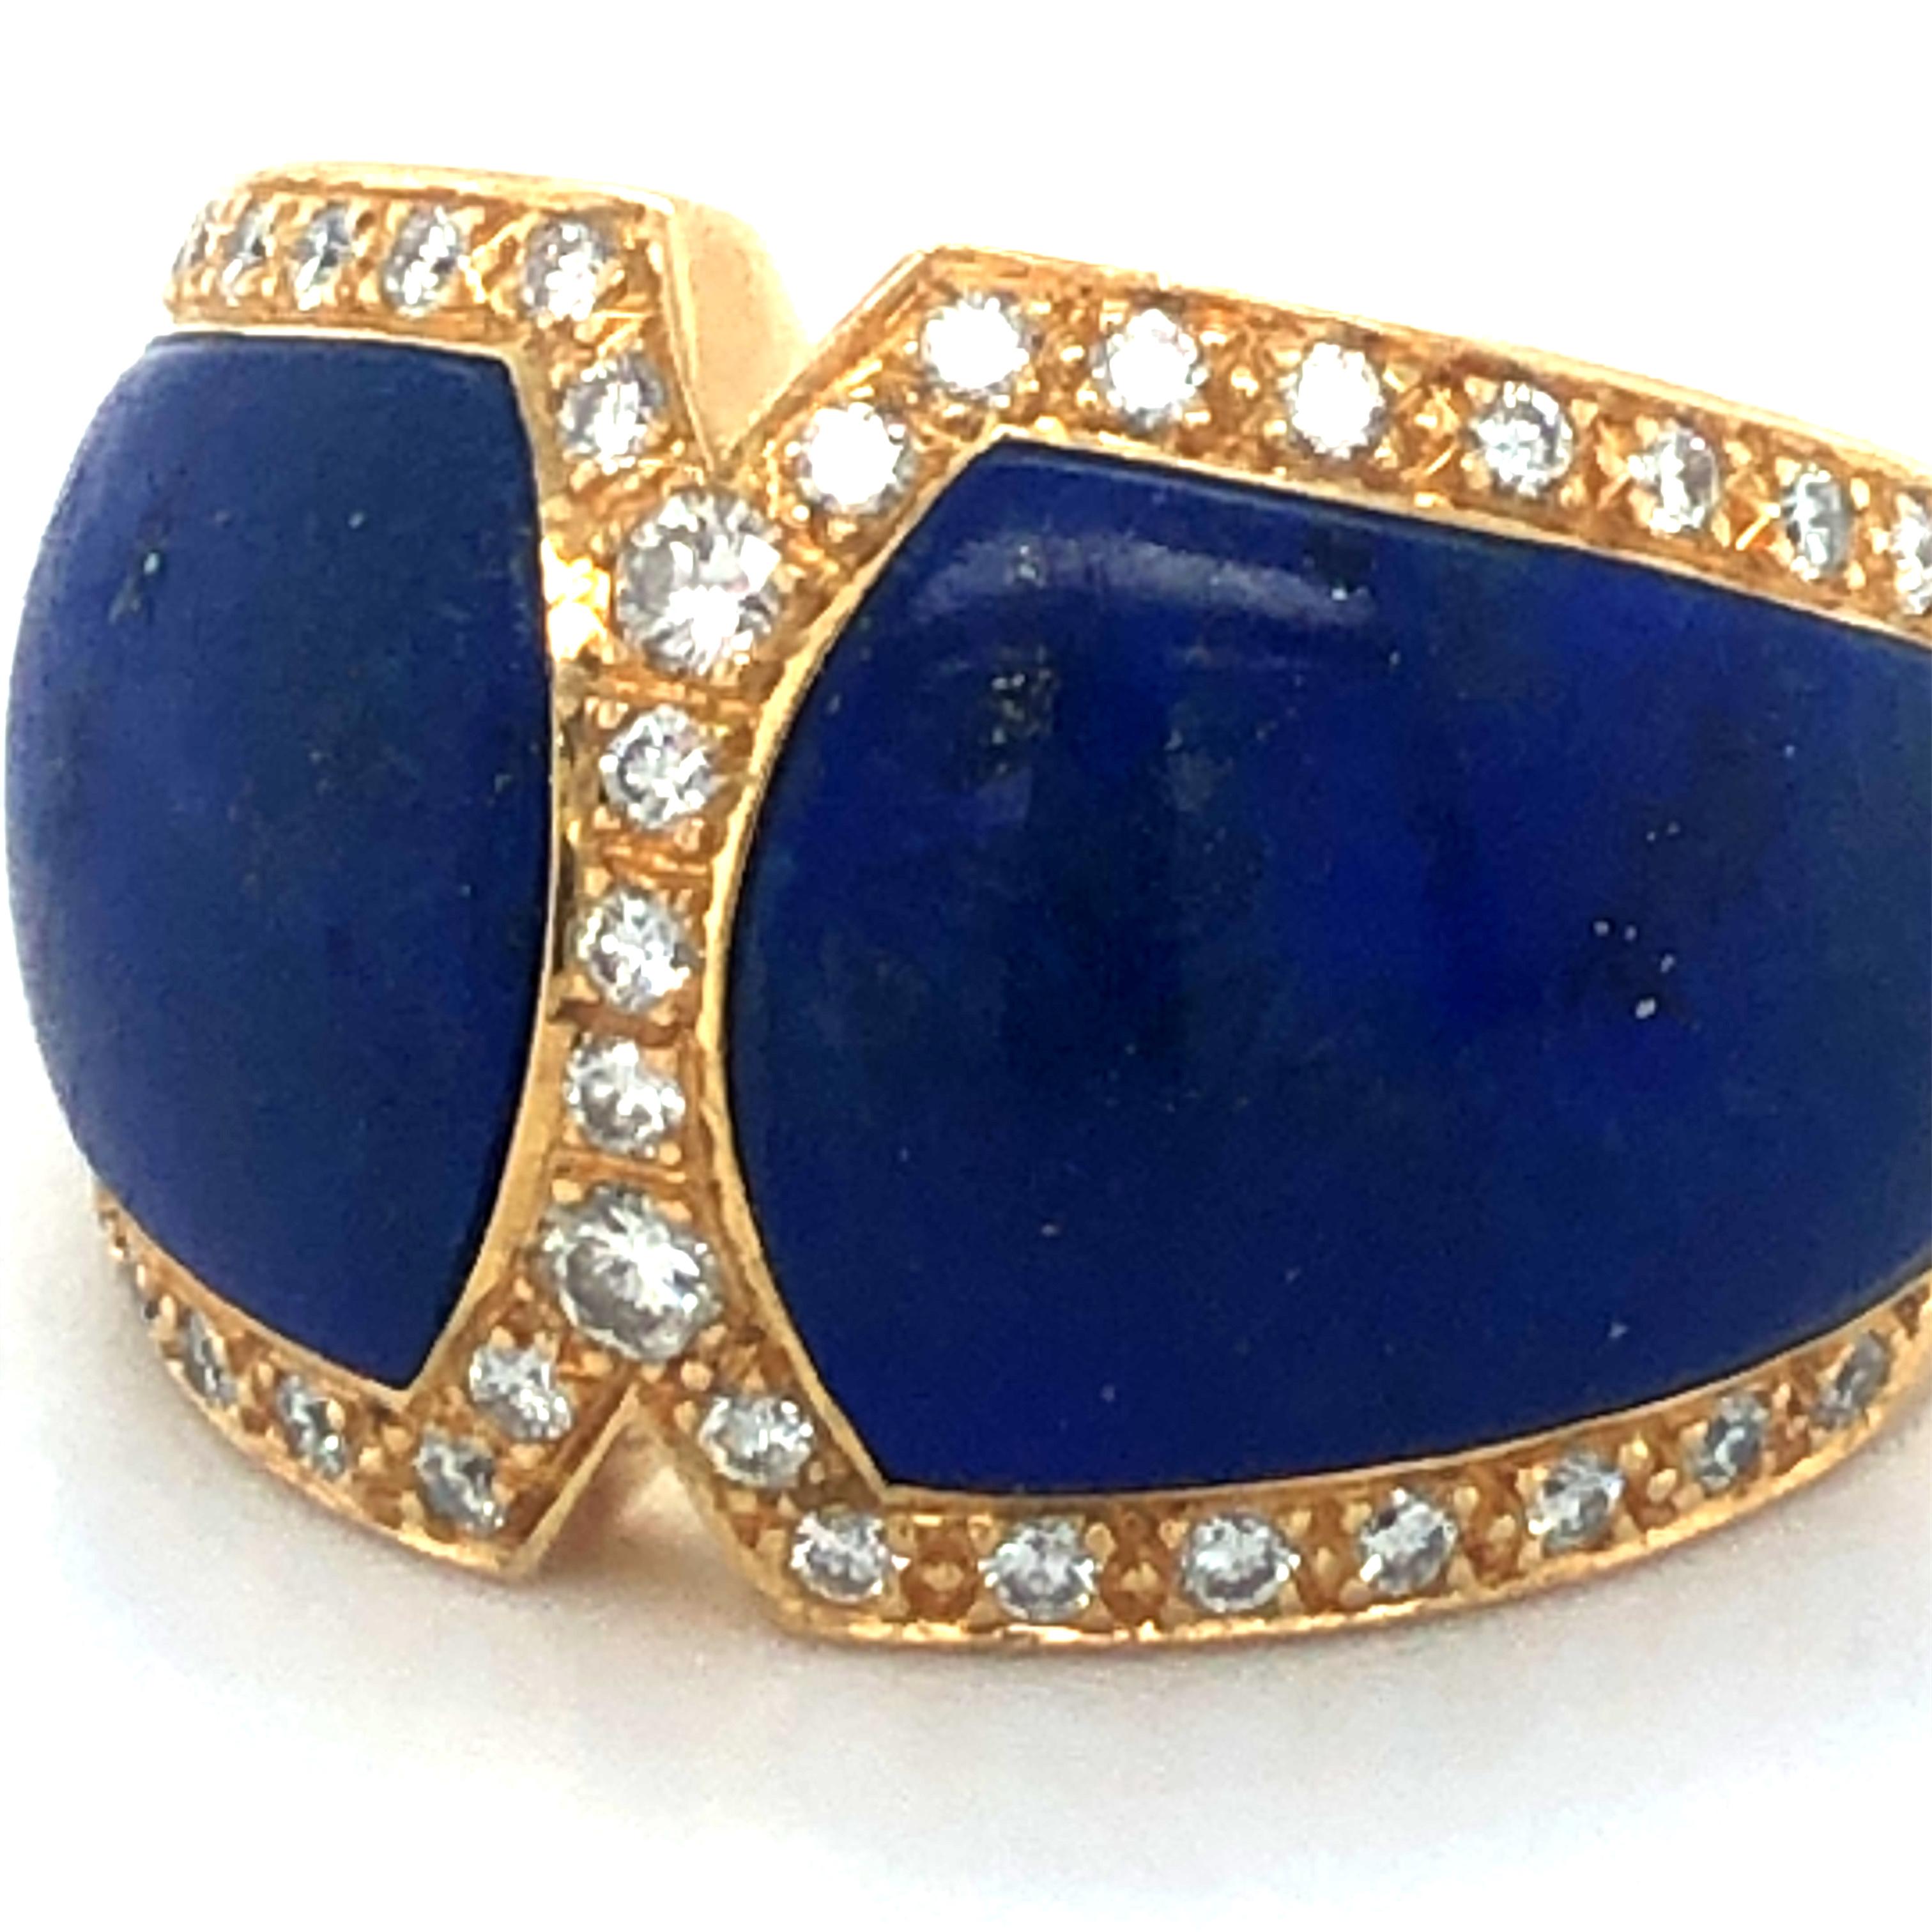 Brilliant Cut Lapis Lazuli and Diamond Ring by Péclard in 18 Karat Yellow Gold